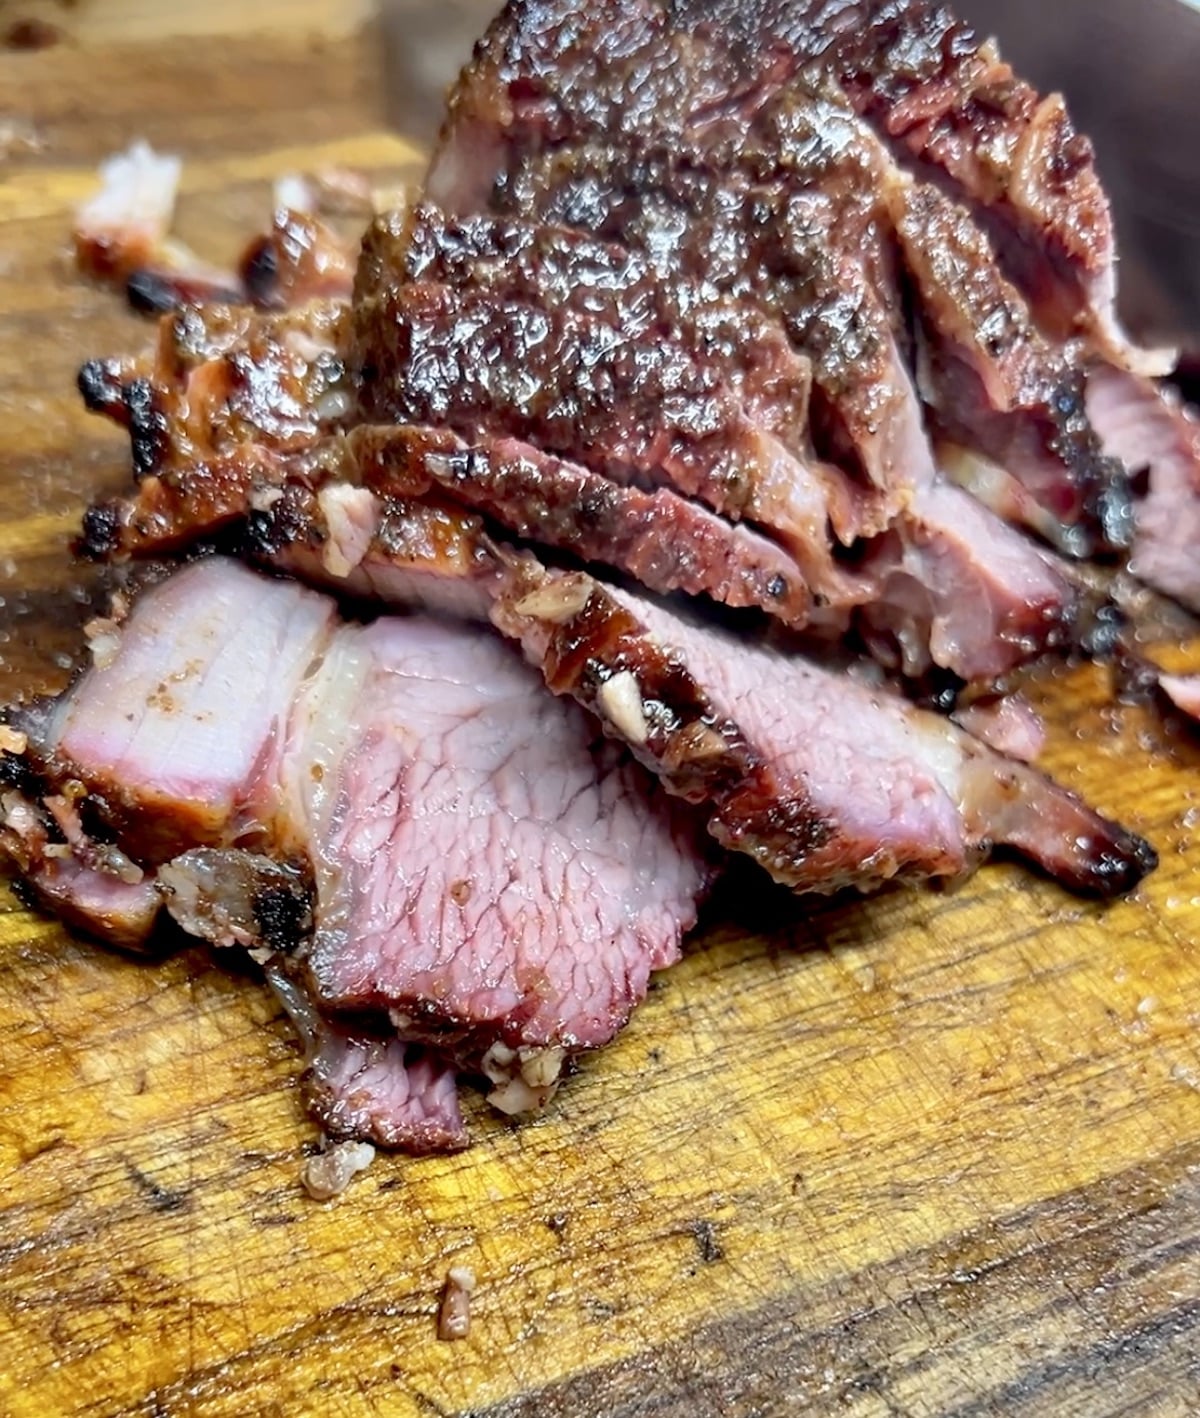 Sliced beef ribs on a cutting board.